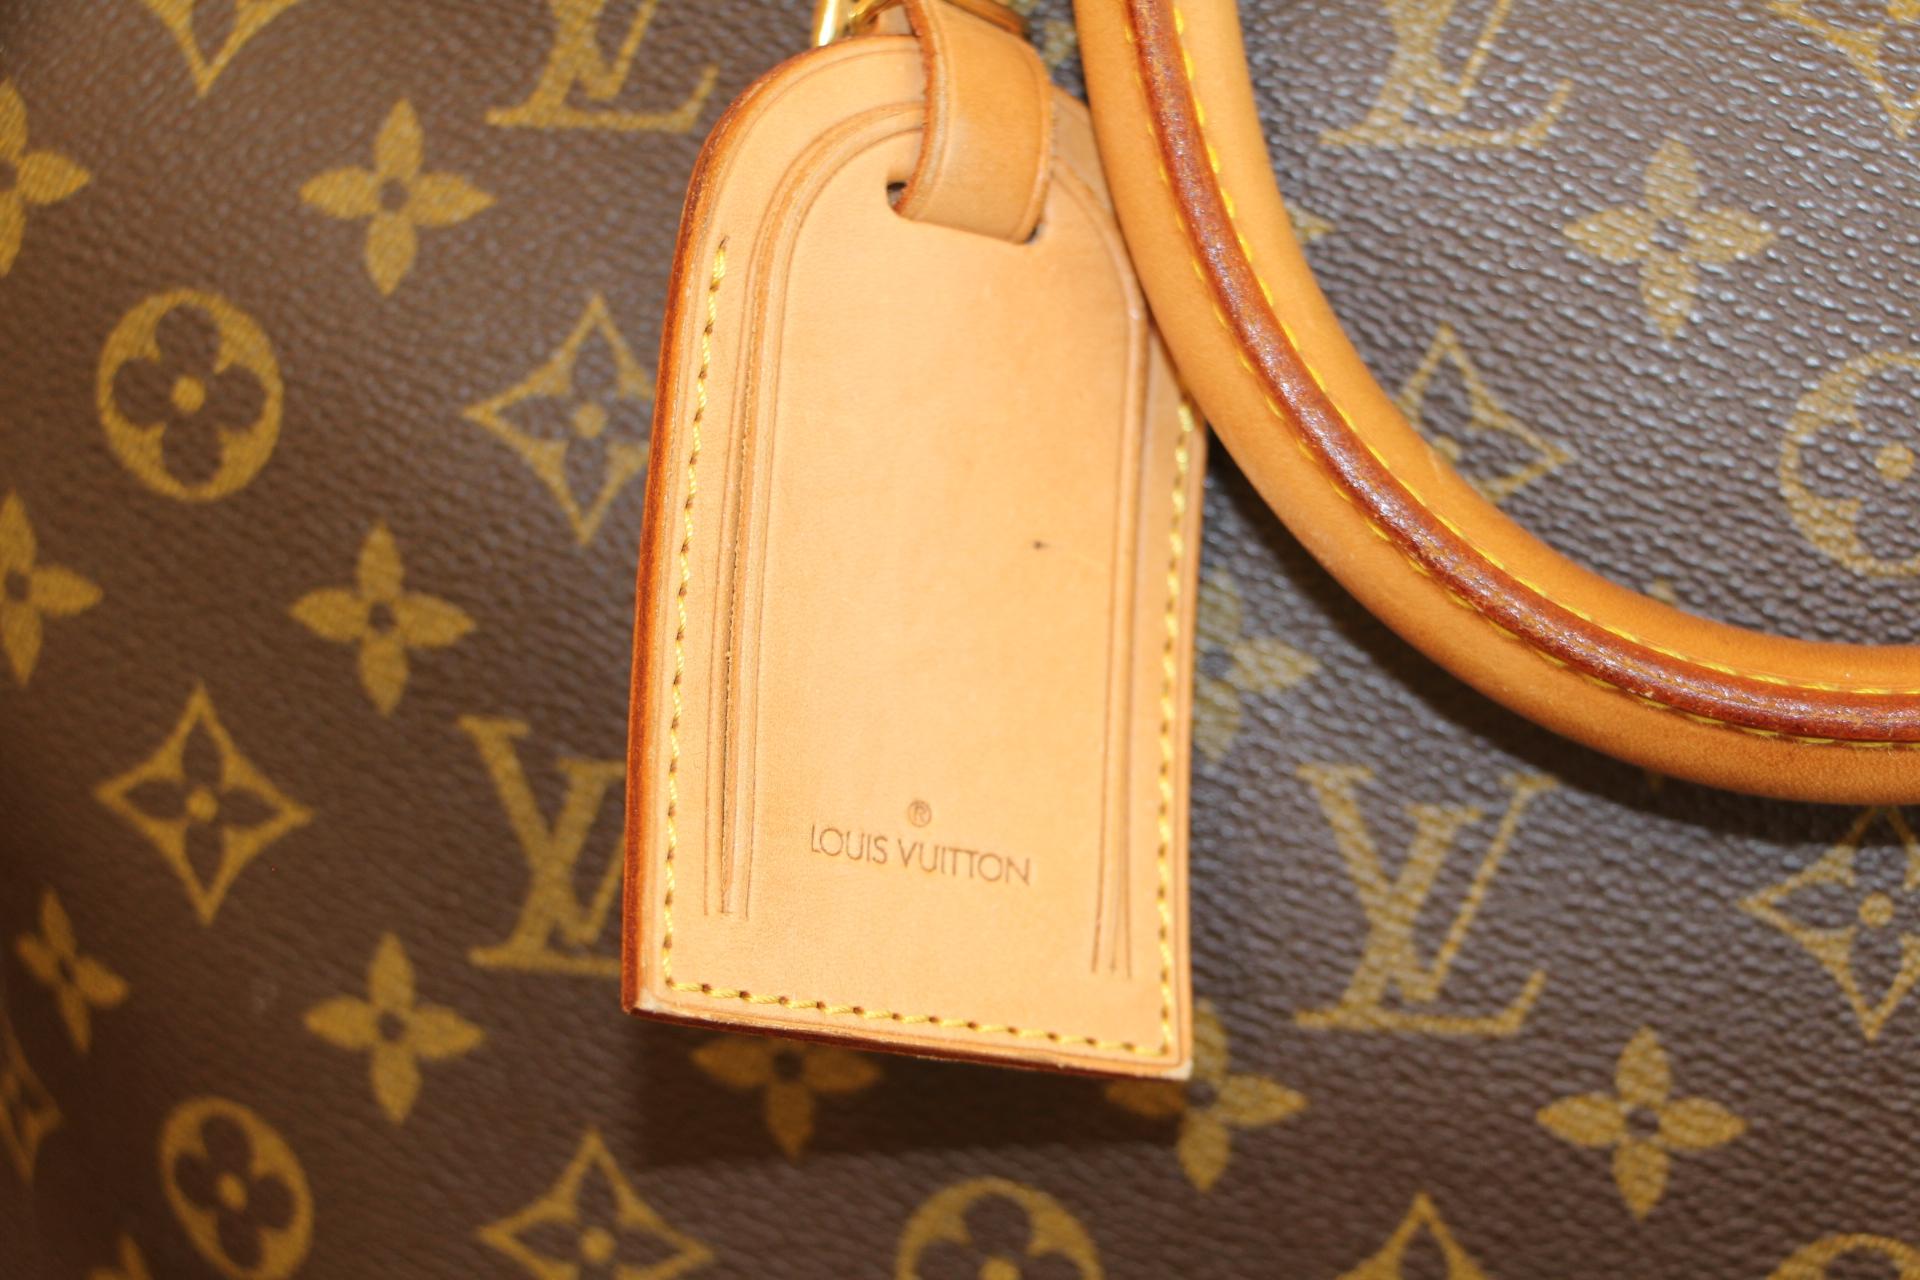 Louis Vuitton Bag in Monogram, 2 compartments 10